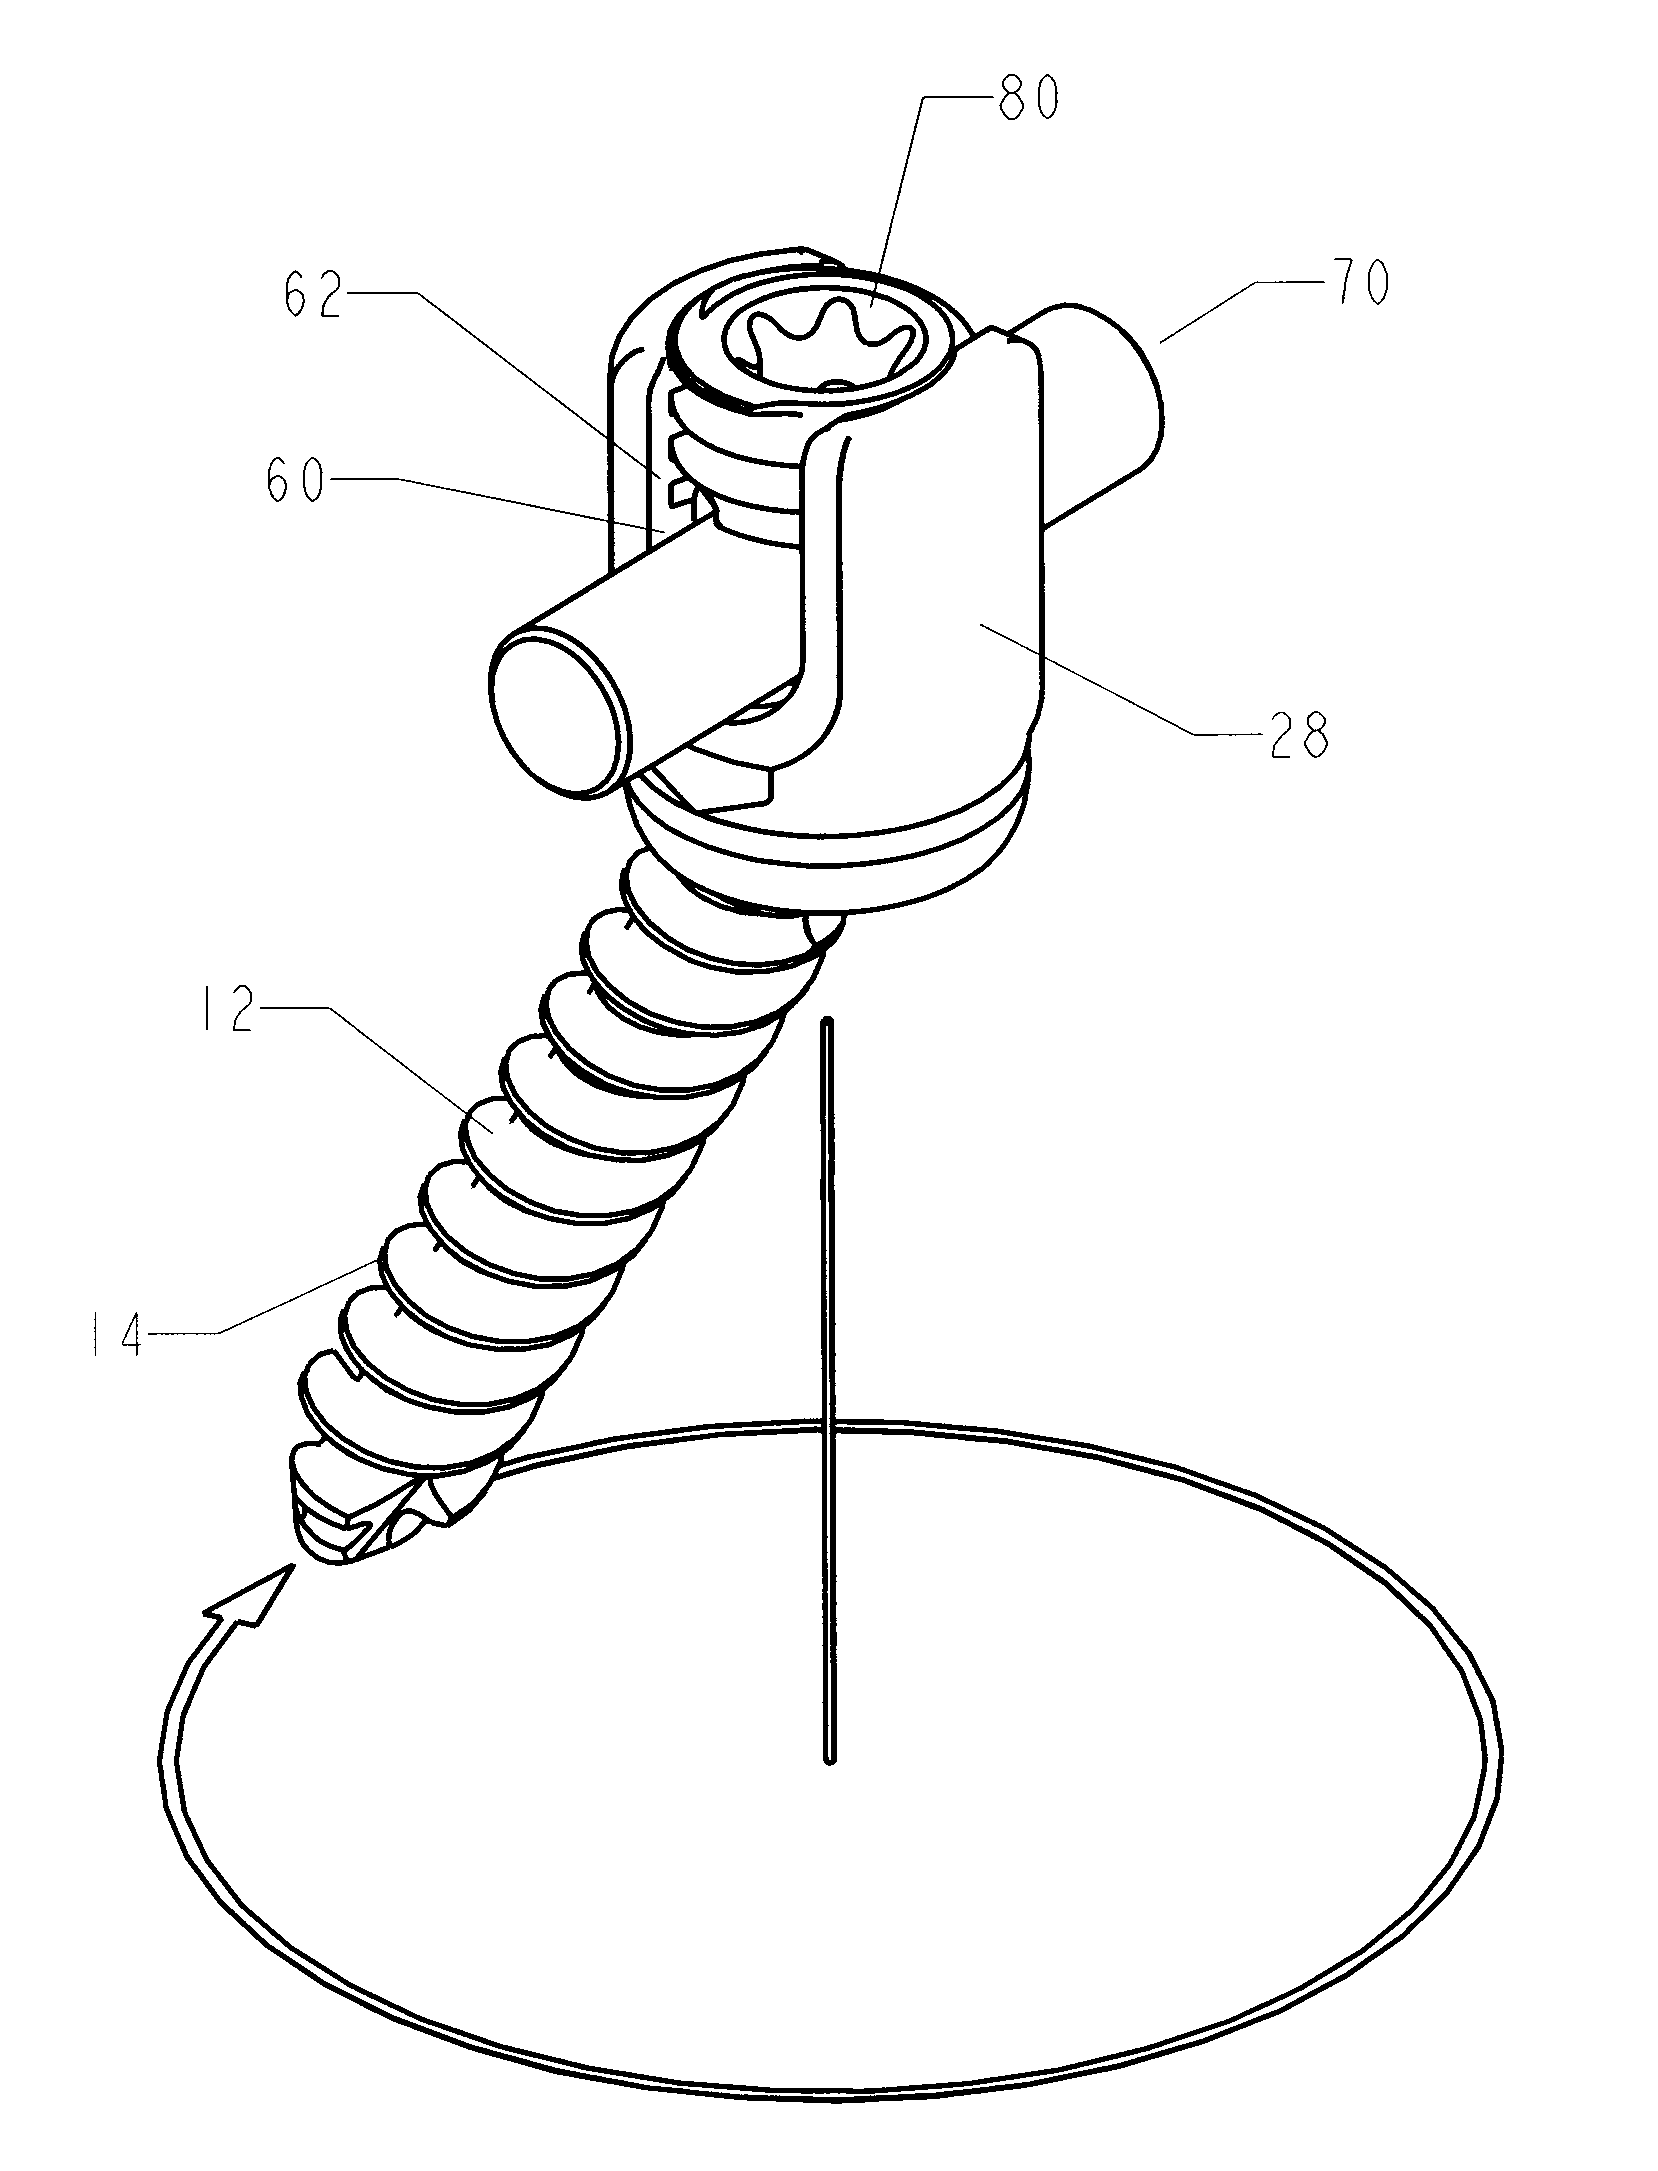 Spring clip bottom loading polyaxial ball and socket fastener